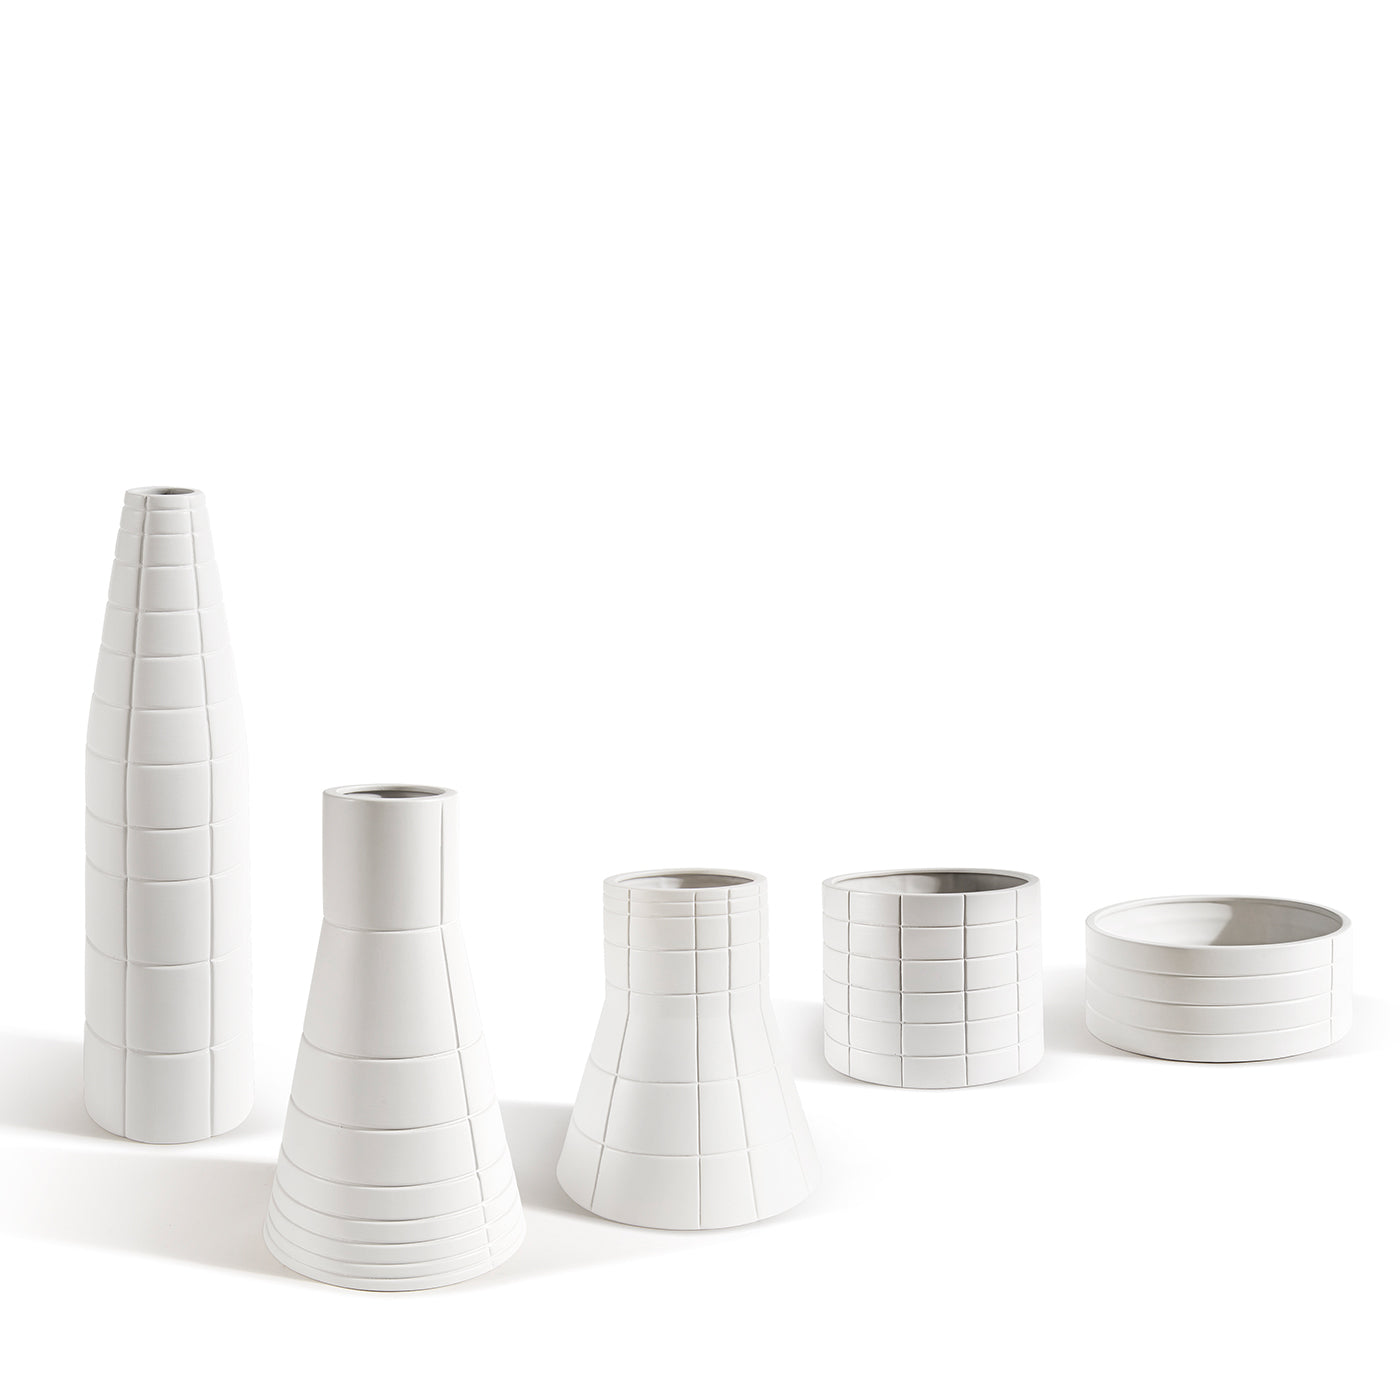 Rikuadra White Ceramic Vase #1 - Alternative view 1